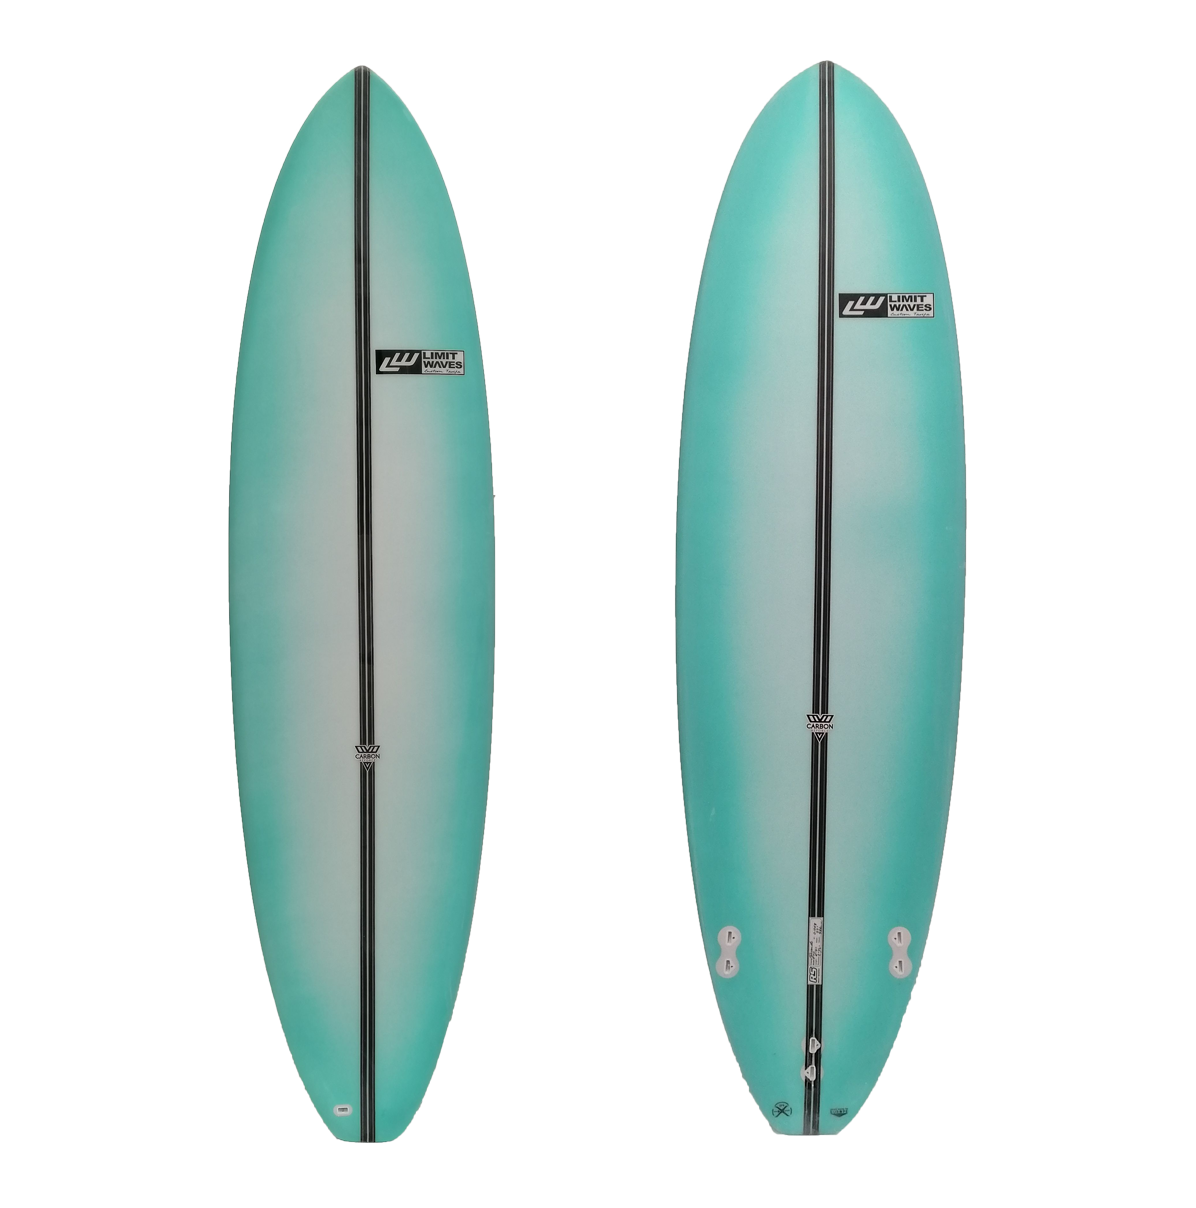 Evo Surf Carbon Stringer